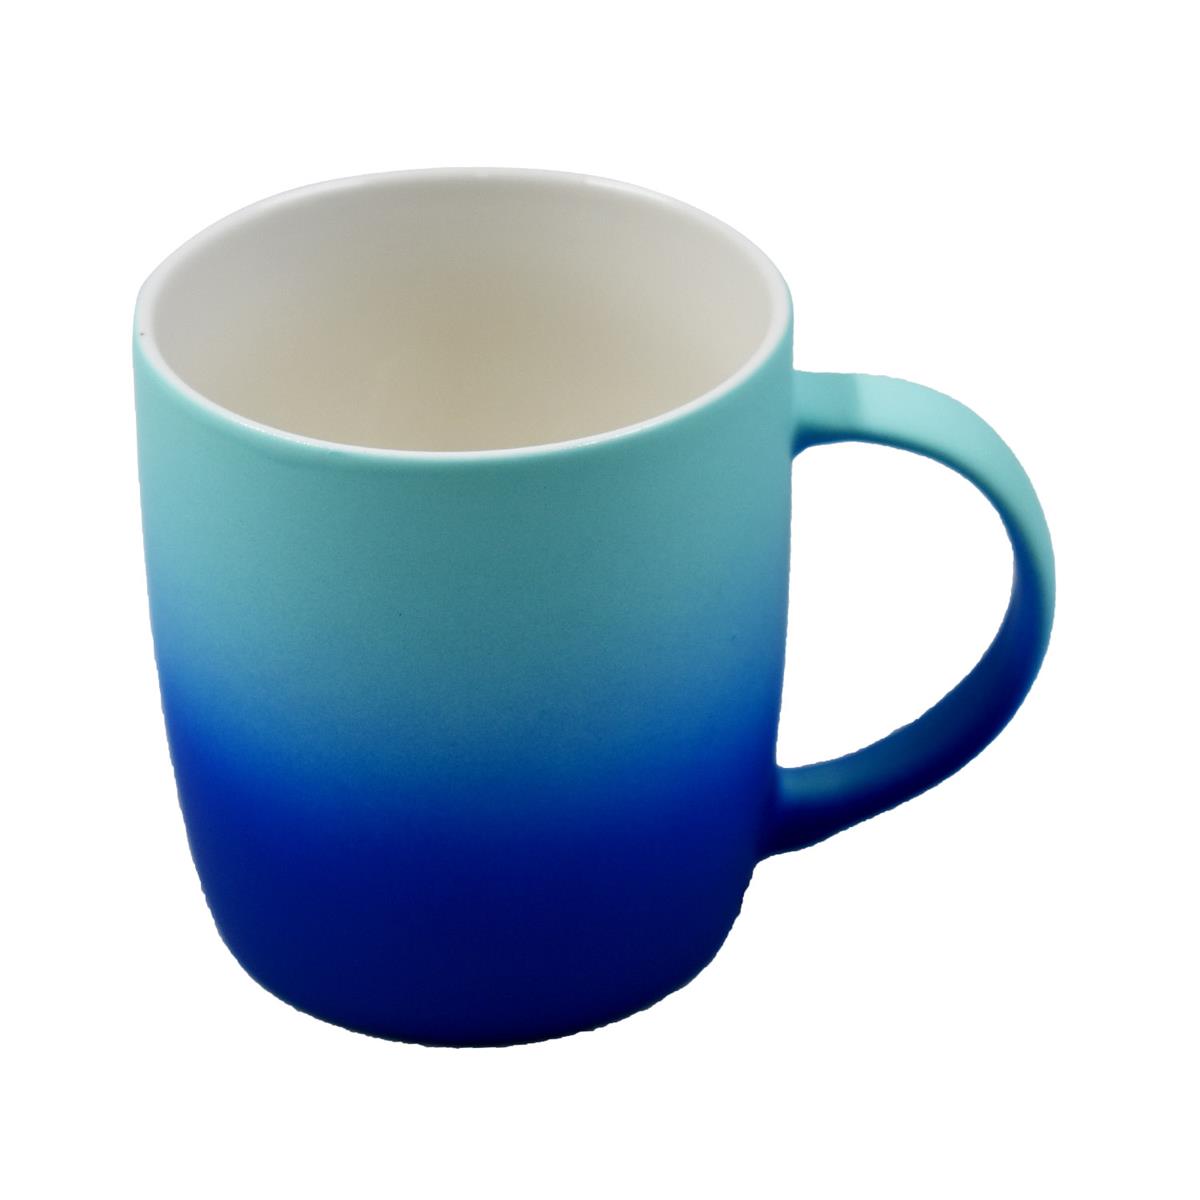 Ceramic Coffee or Tea Mug with handle - 325ml (BPY173-A)